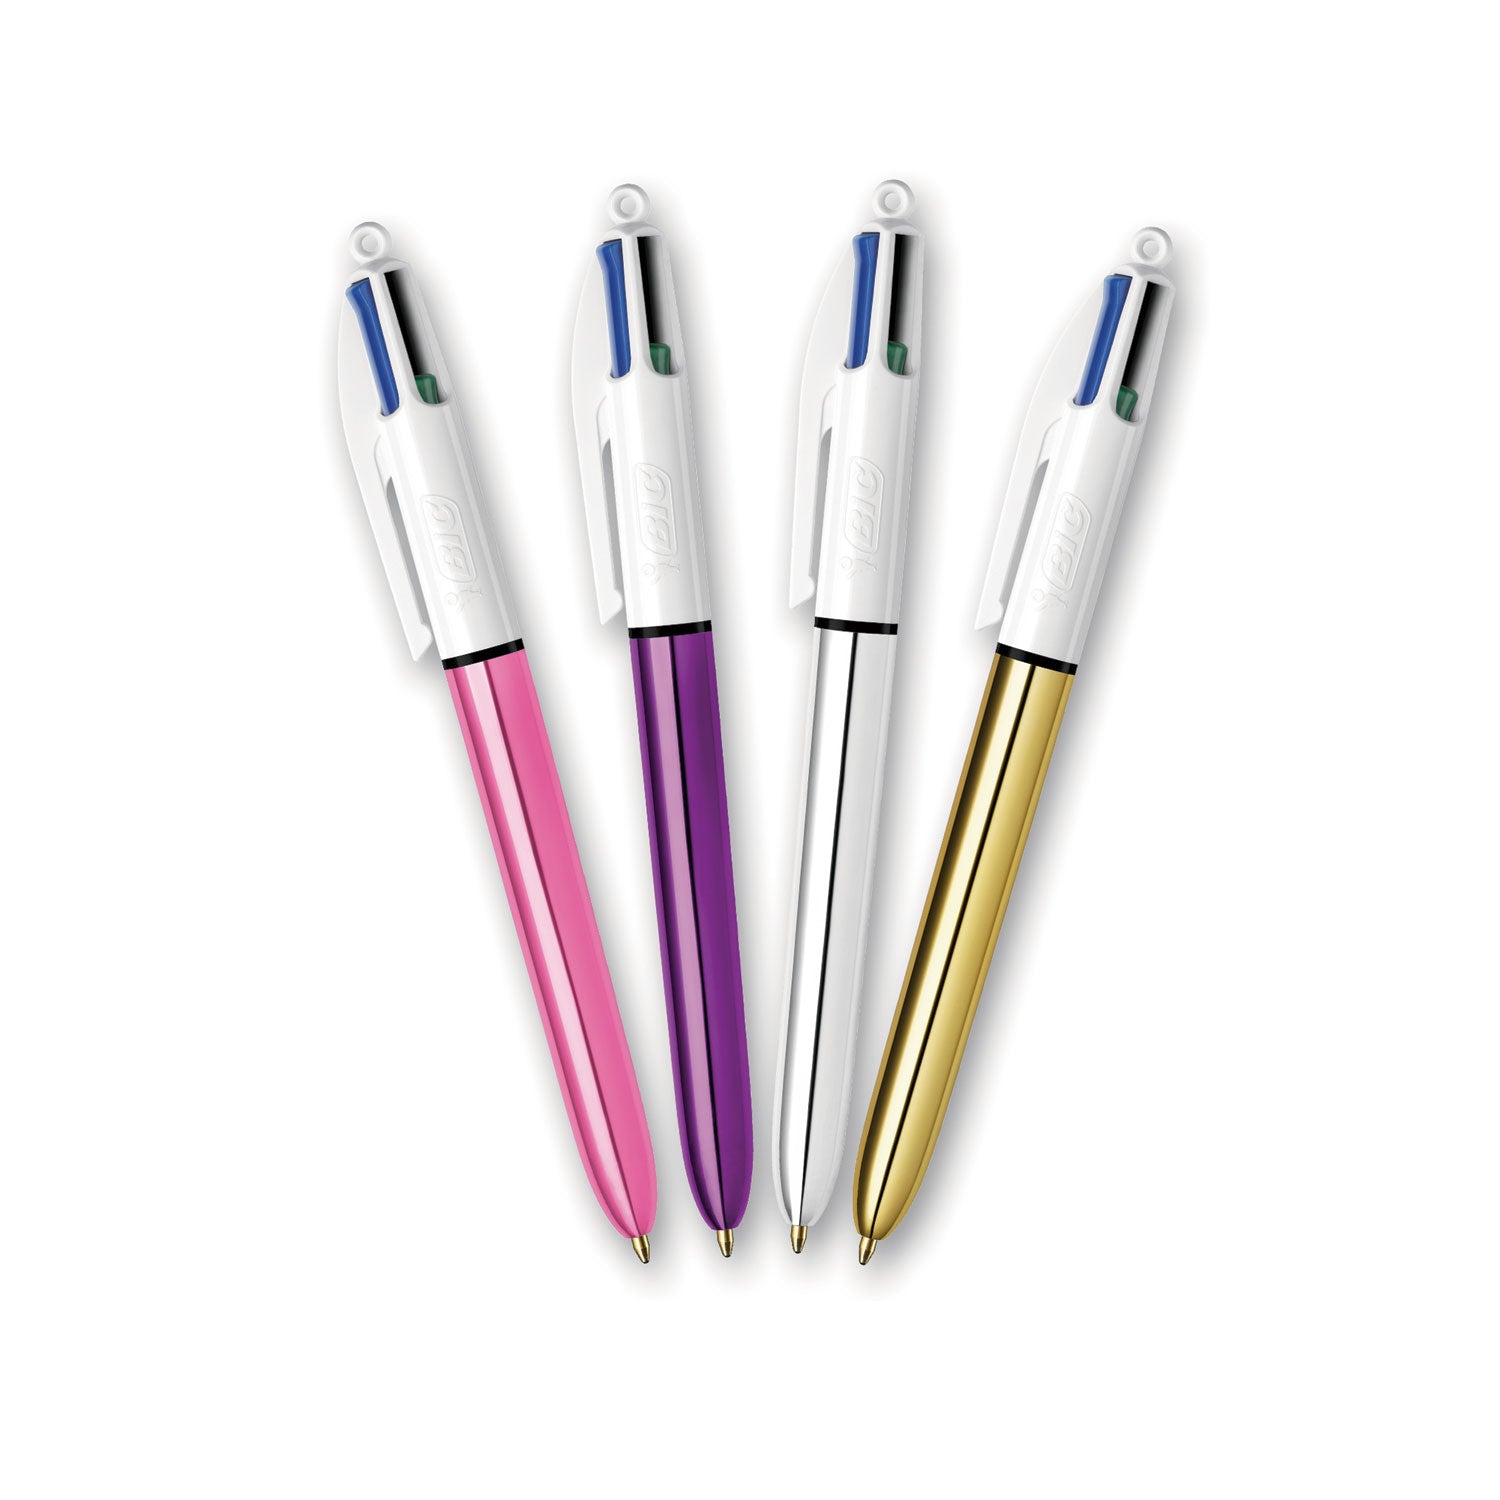 4-Color Multi-Function Ballpoint Pen, Retractable, Medium 1 mm, Black/Blue/Green/Red Ink, Randomly Assorted Barrel Colors - 